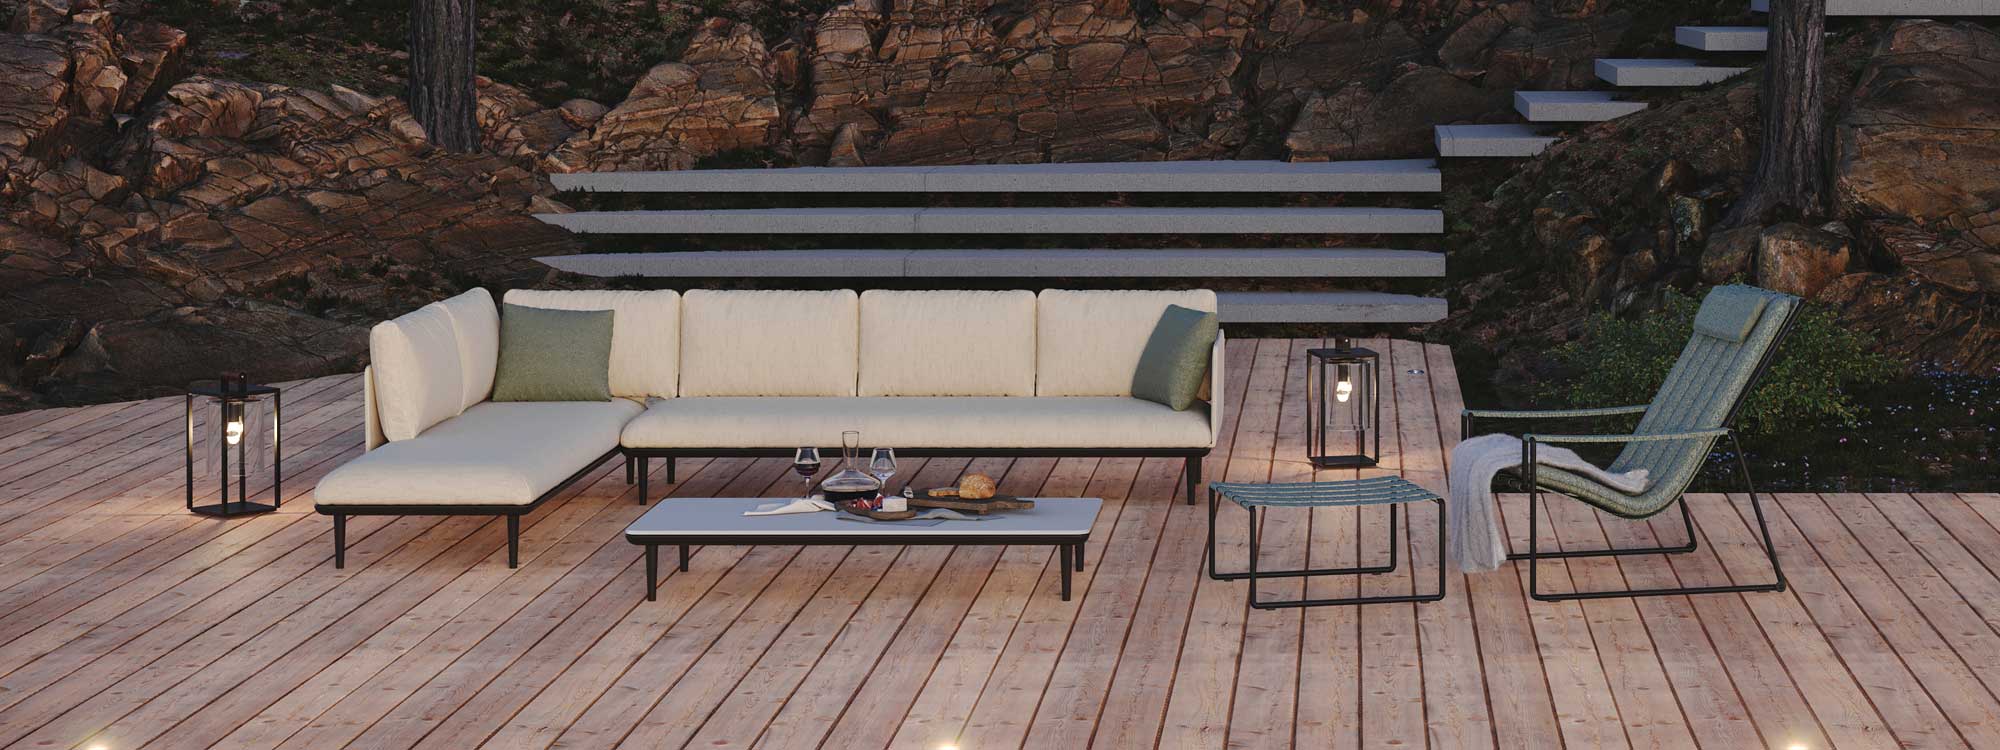 Styletto garden sofas & modular outdoor lounge furniture have chic exterior furniture design by Royal Botania luxury exterior furniture.